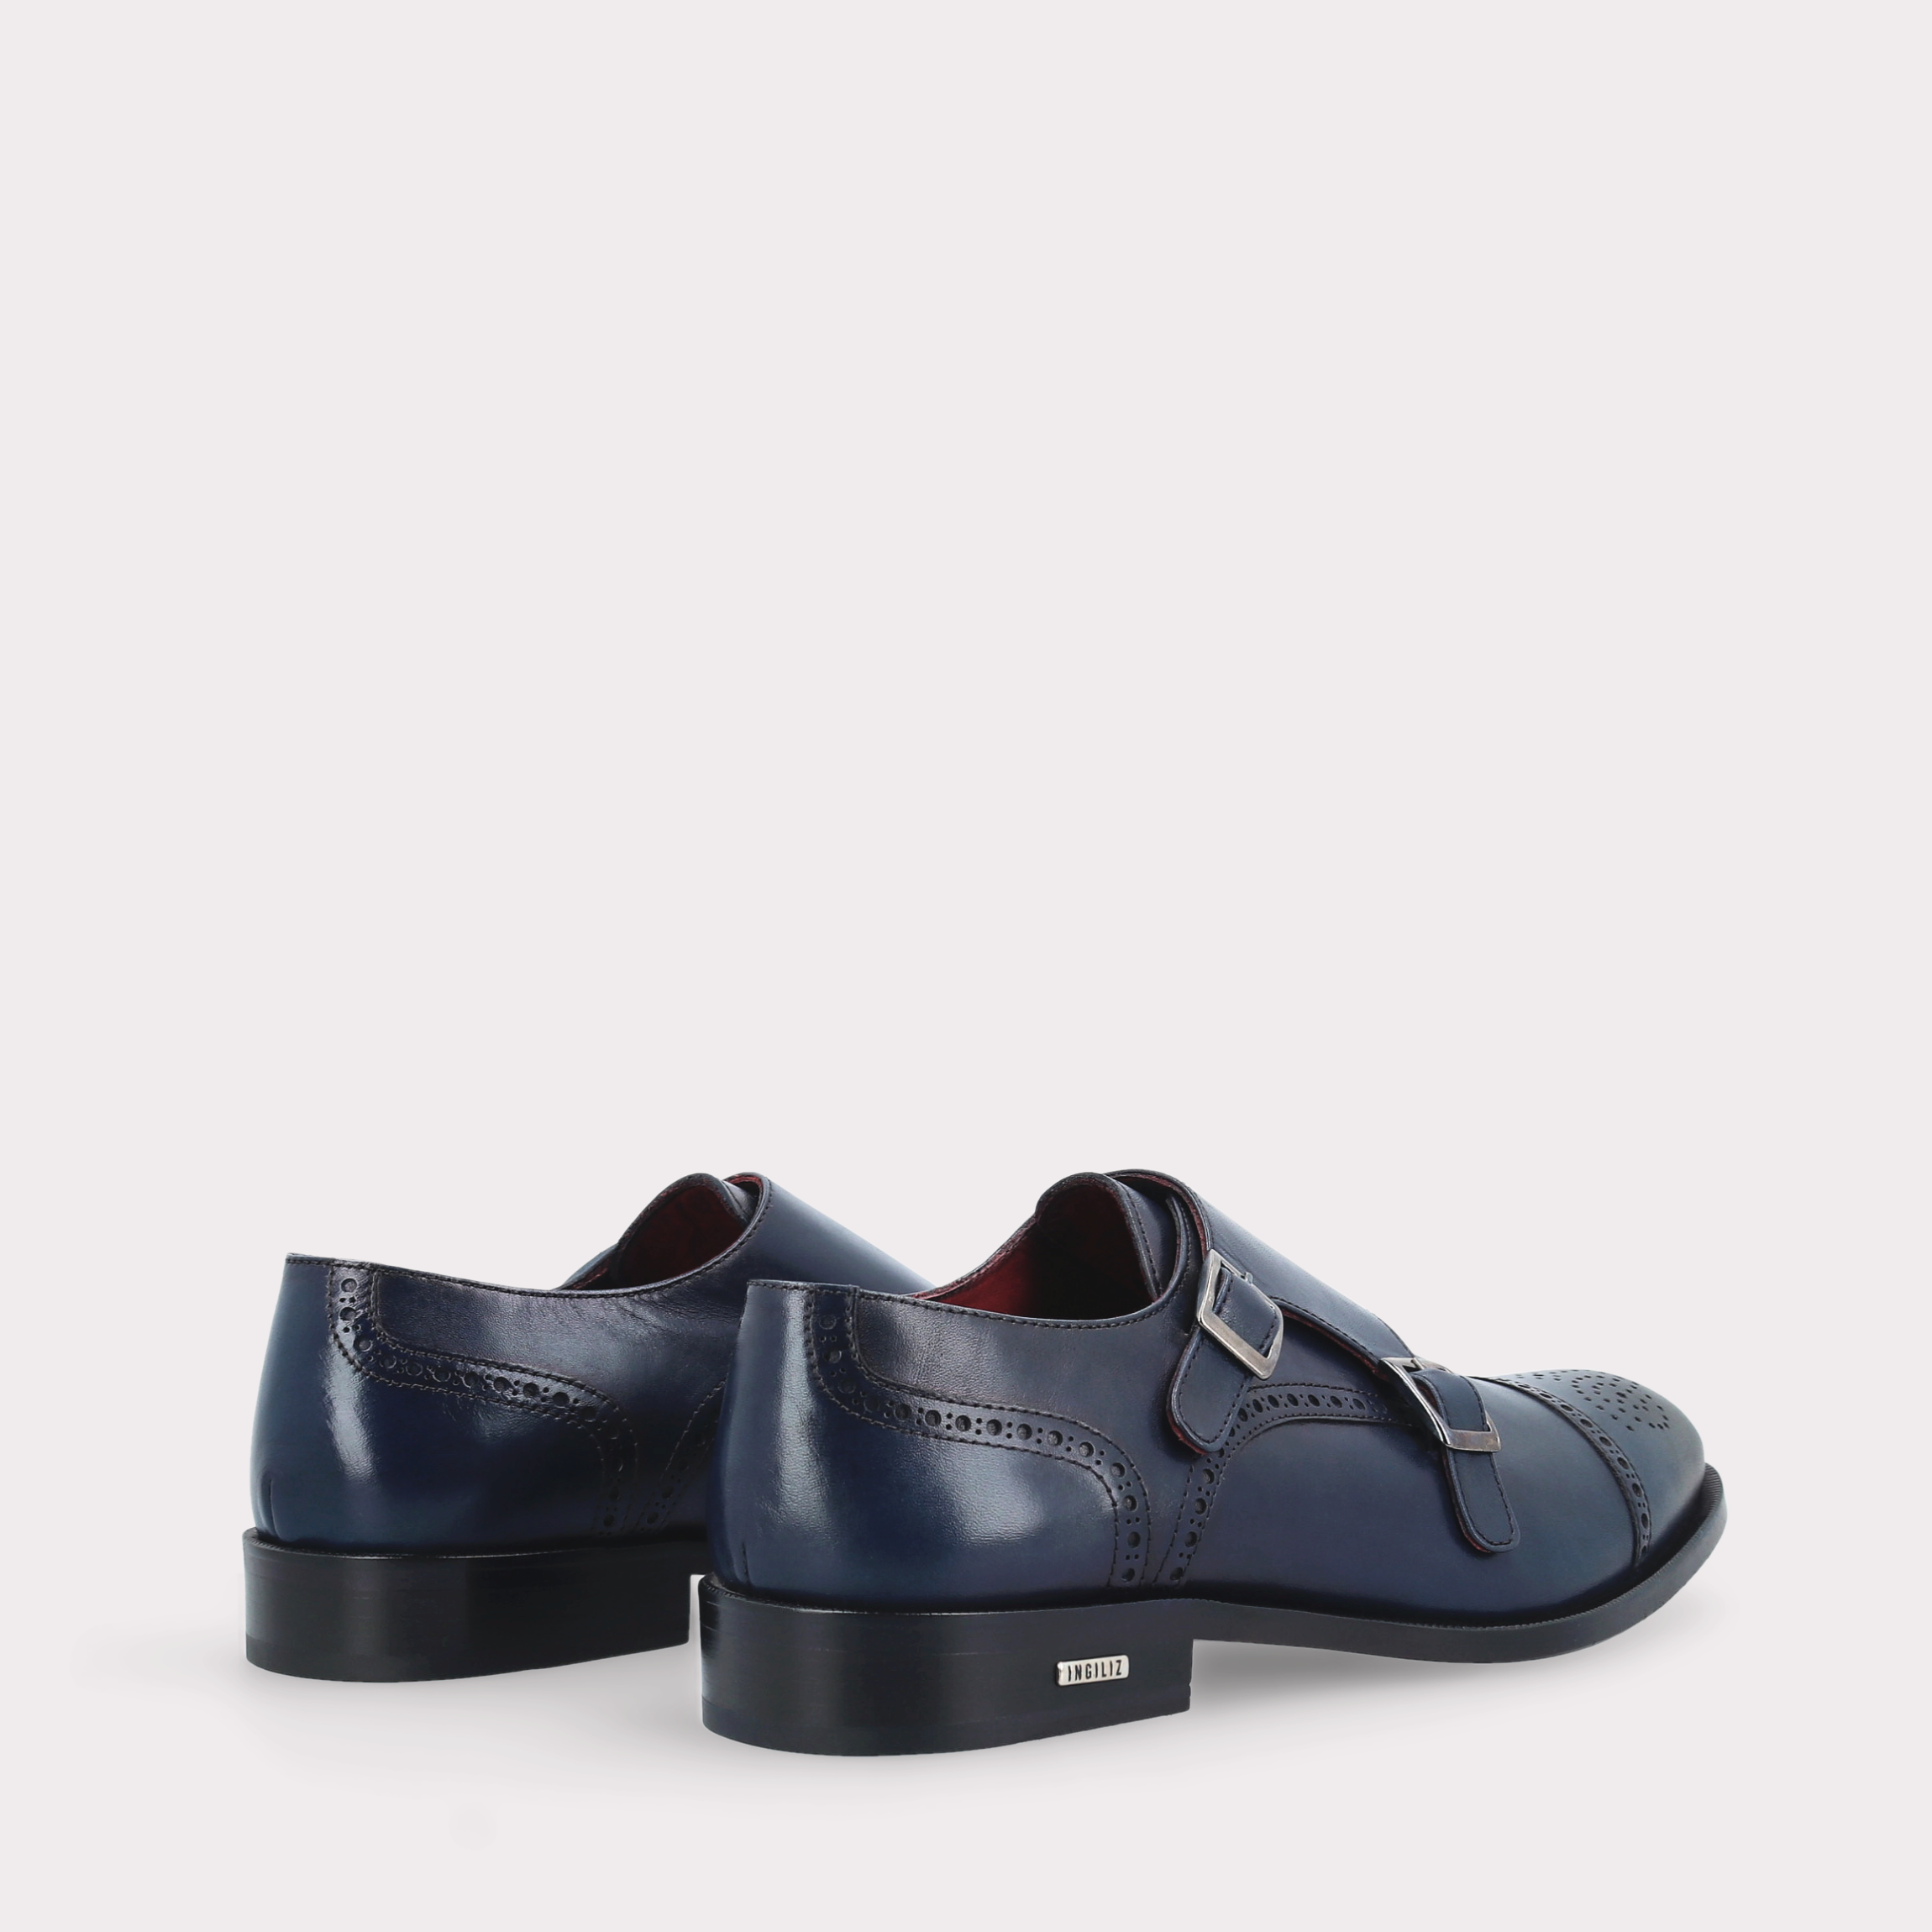 TRENTO 01 dark blue leather monk strap shoes